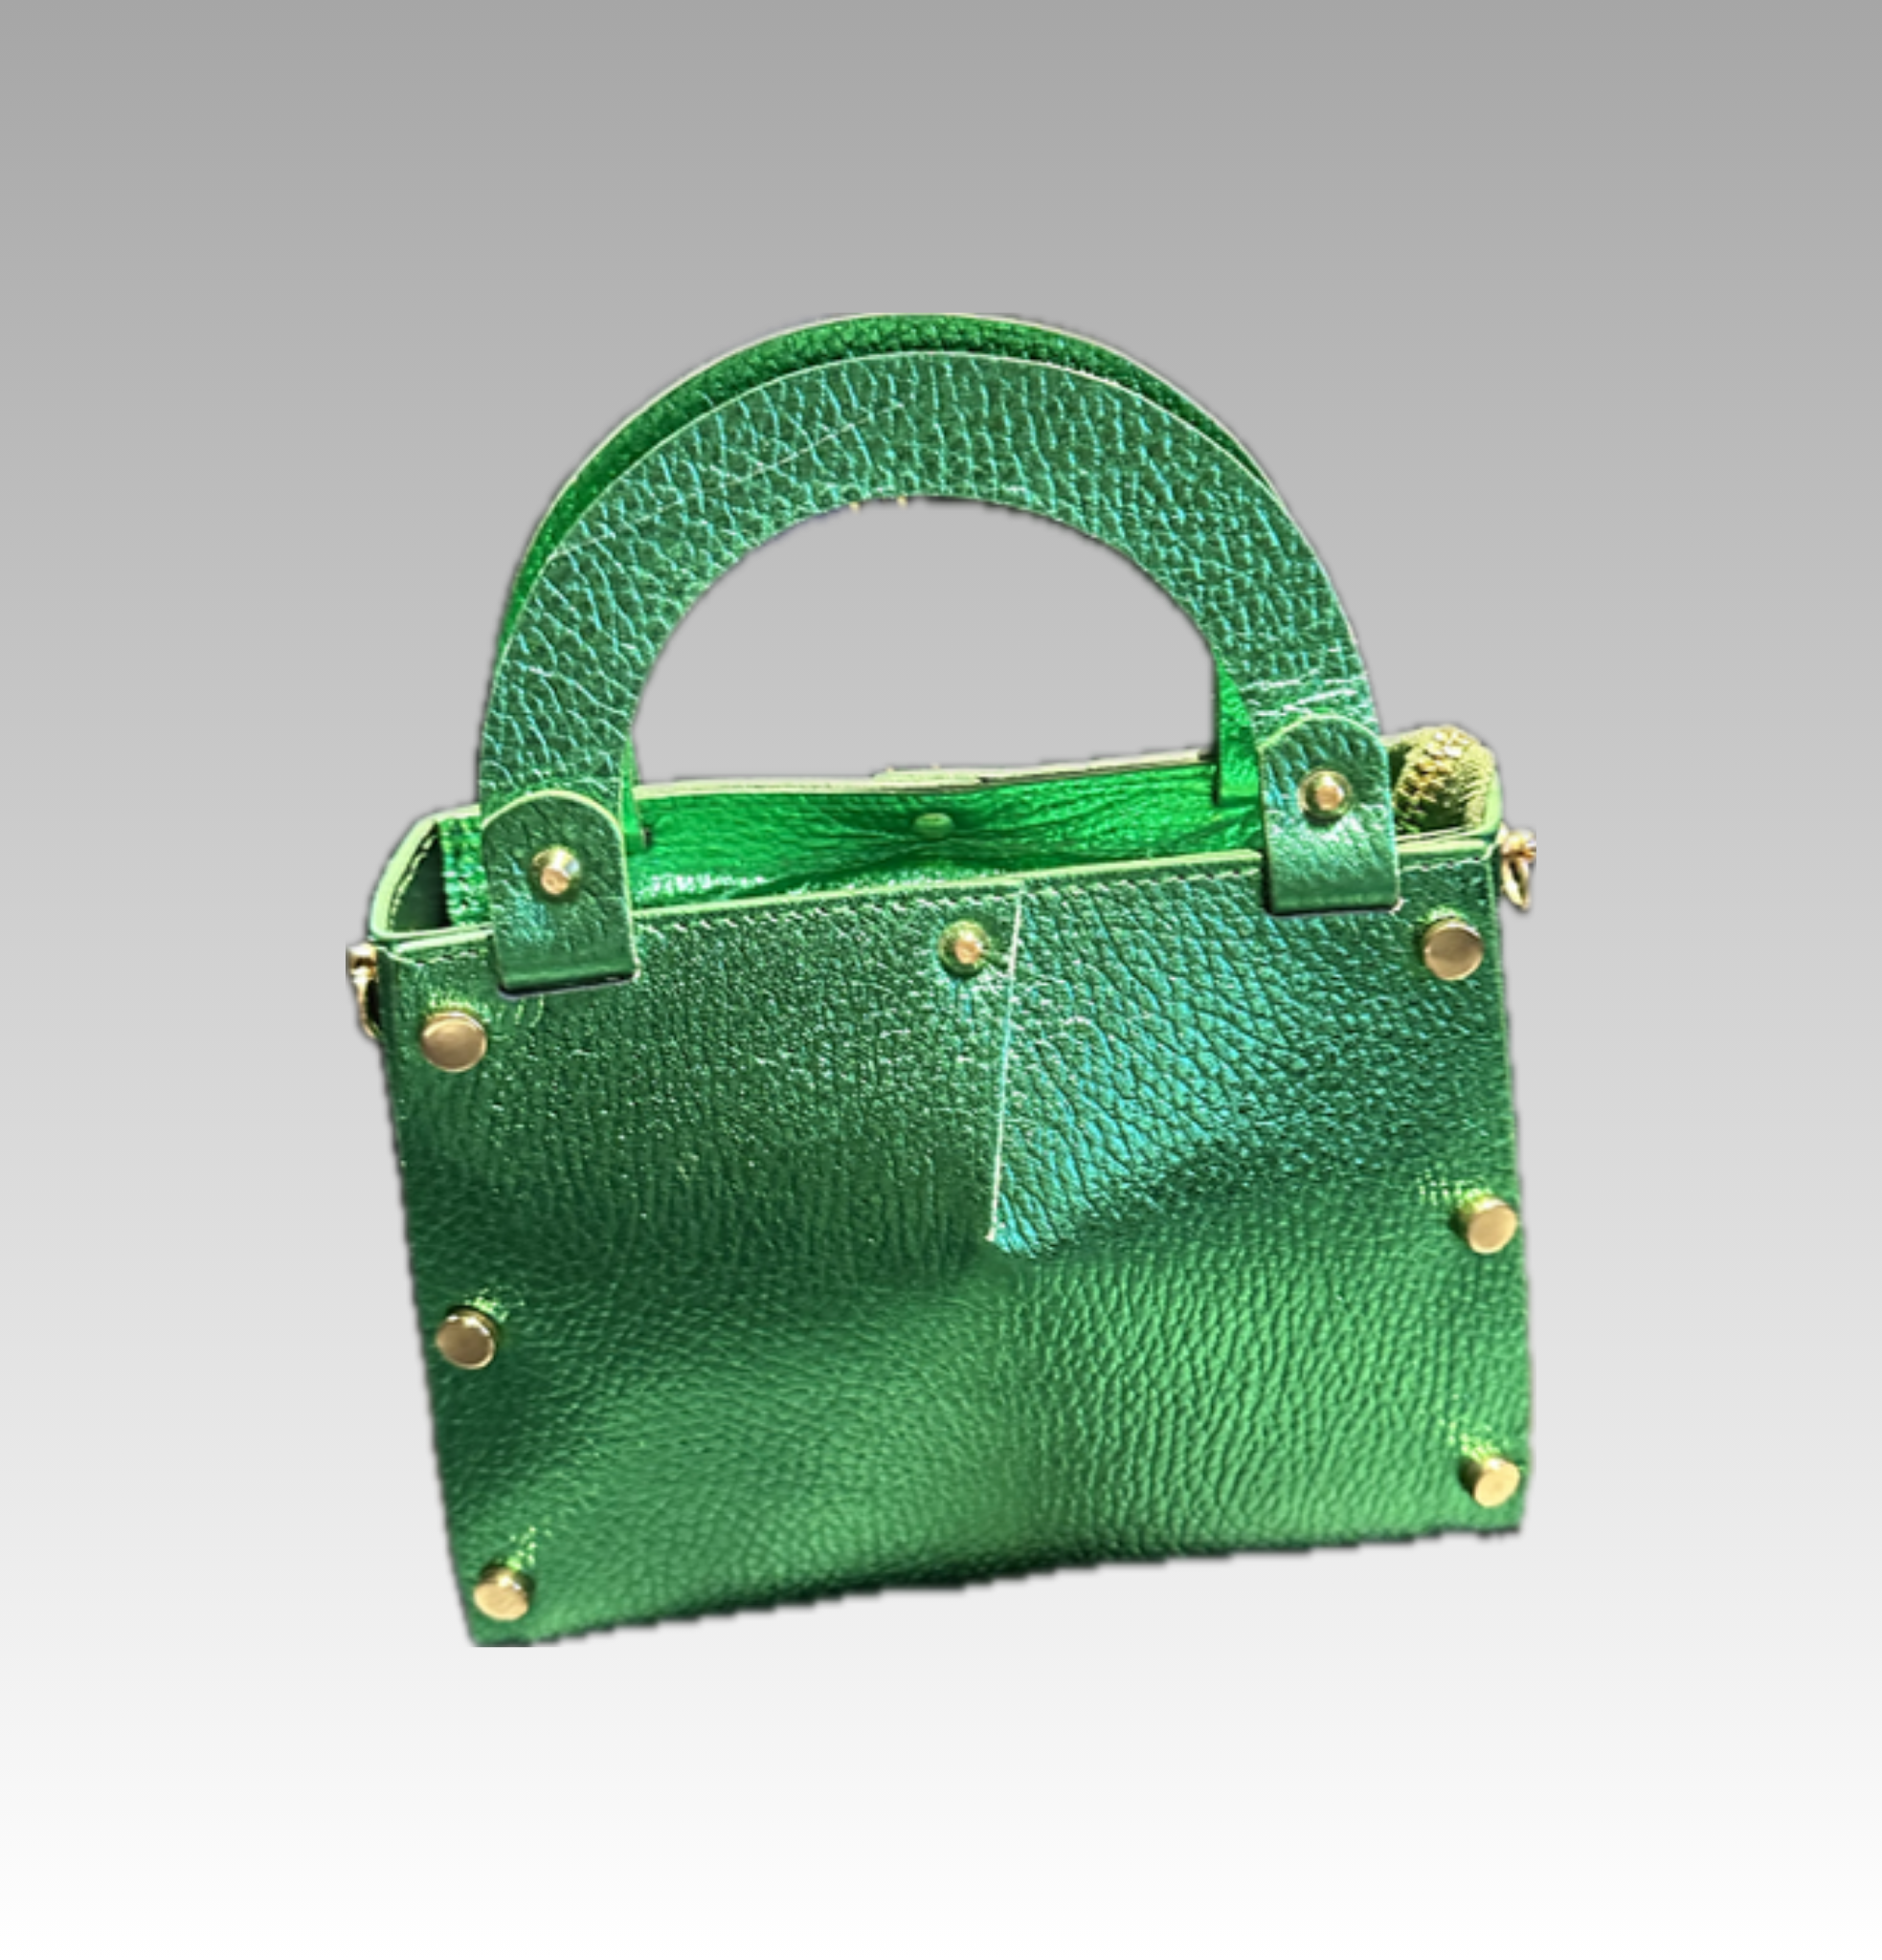 Stylish Green Leather Handbag